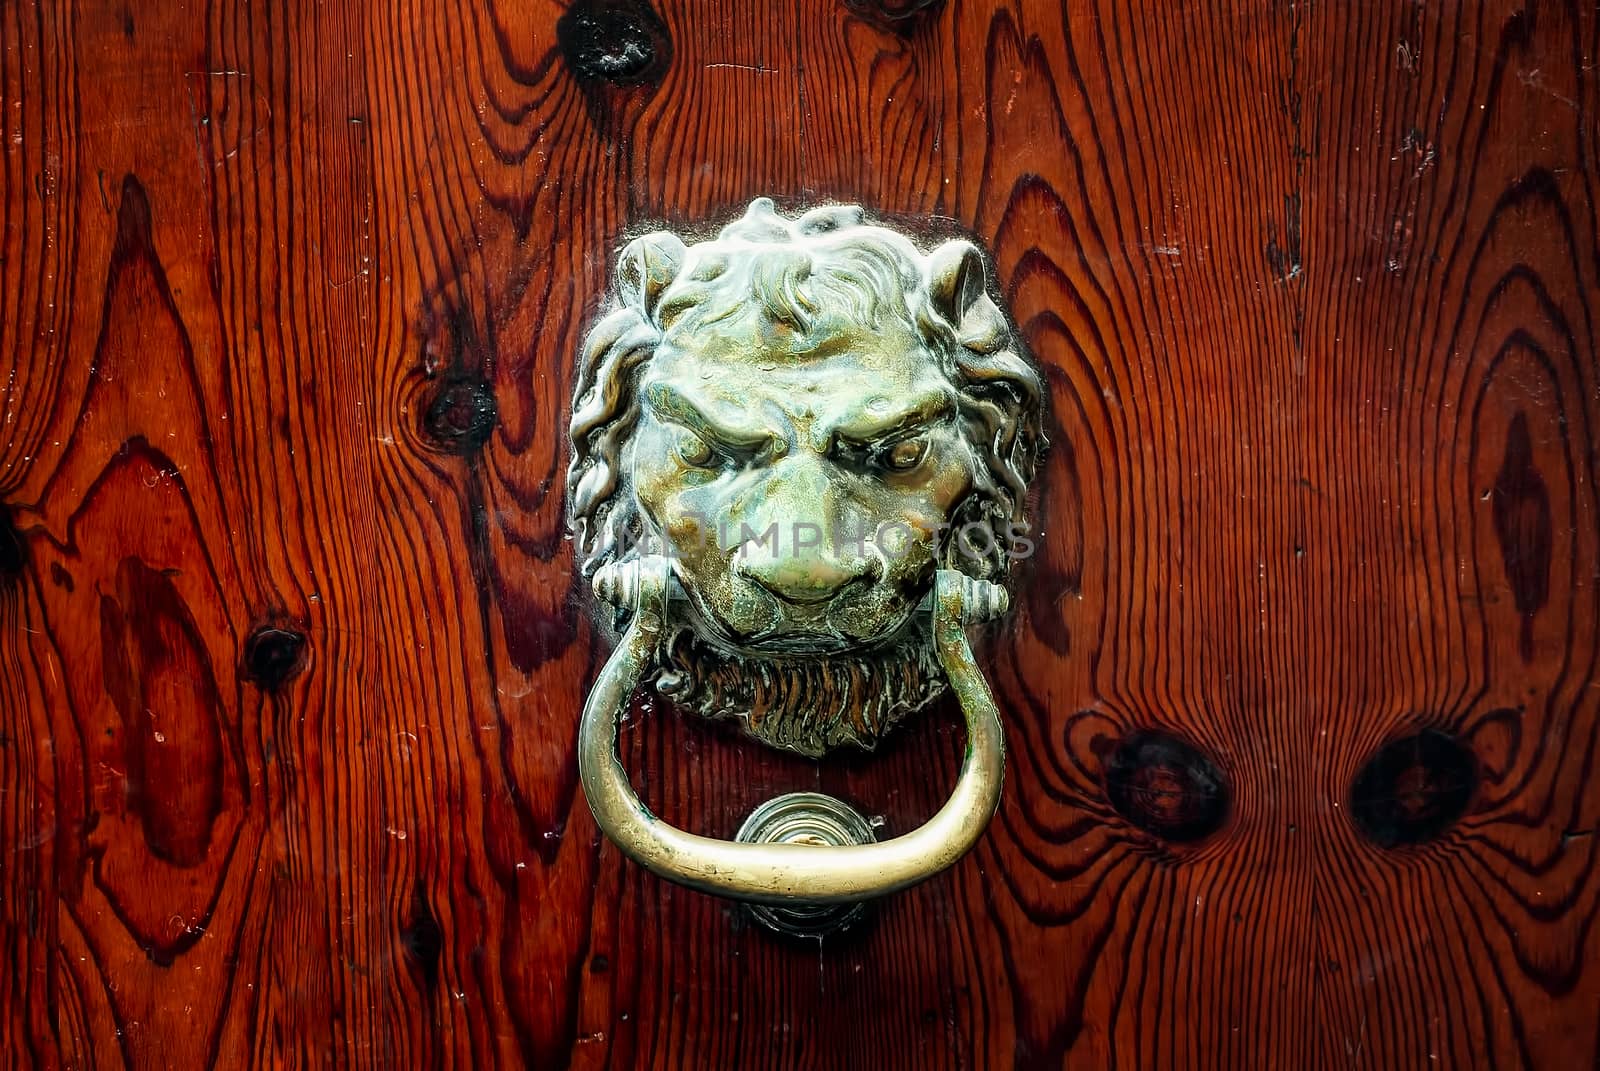 Decorative bronze lion head door knob by GlobePhotos